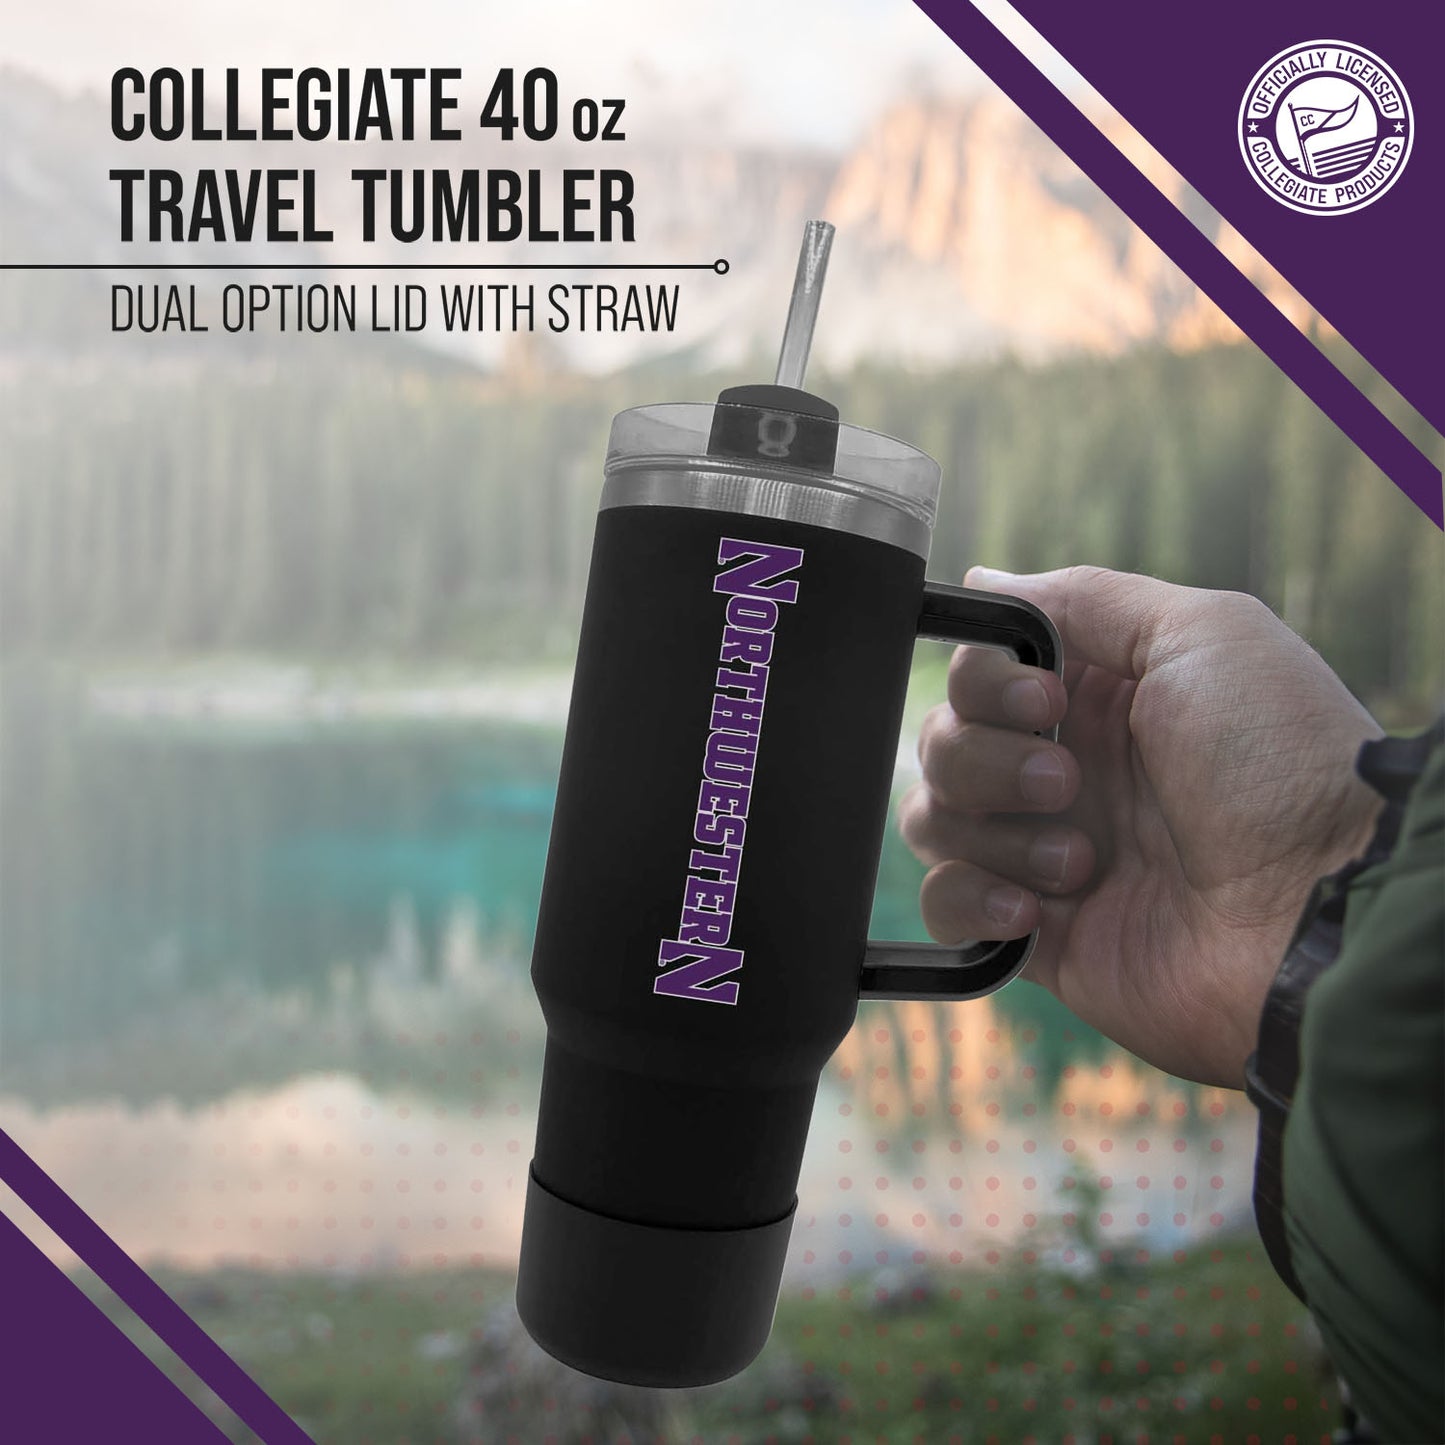 Northwestern Wildcats College & University 40 oz Travel Tumbler With Handle - Black